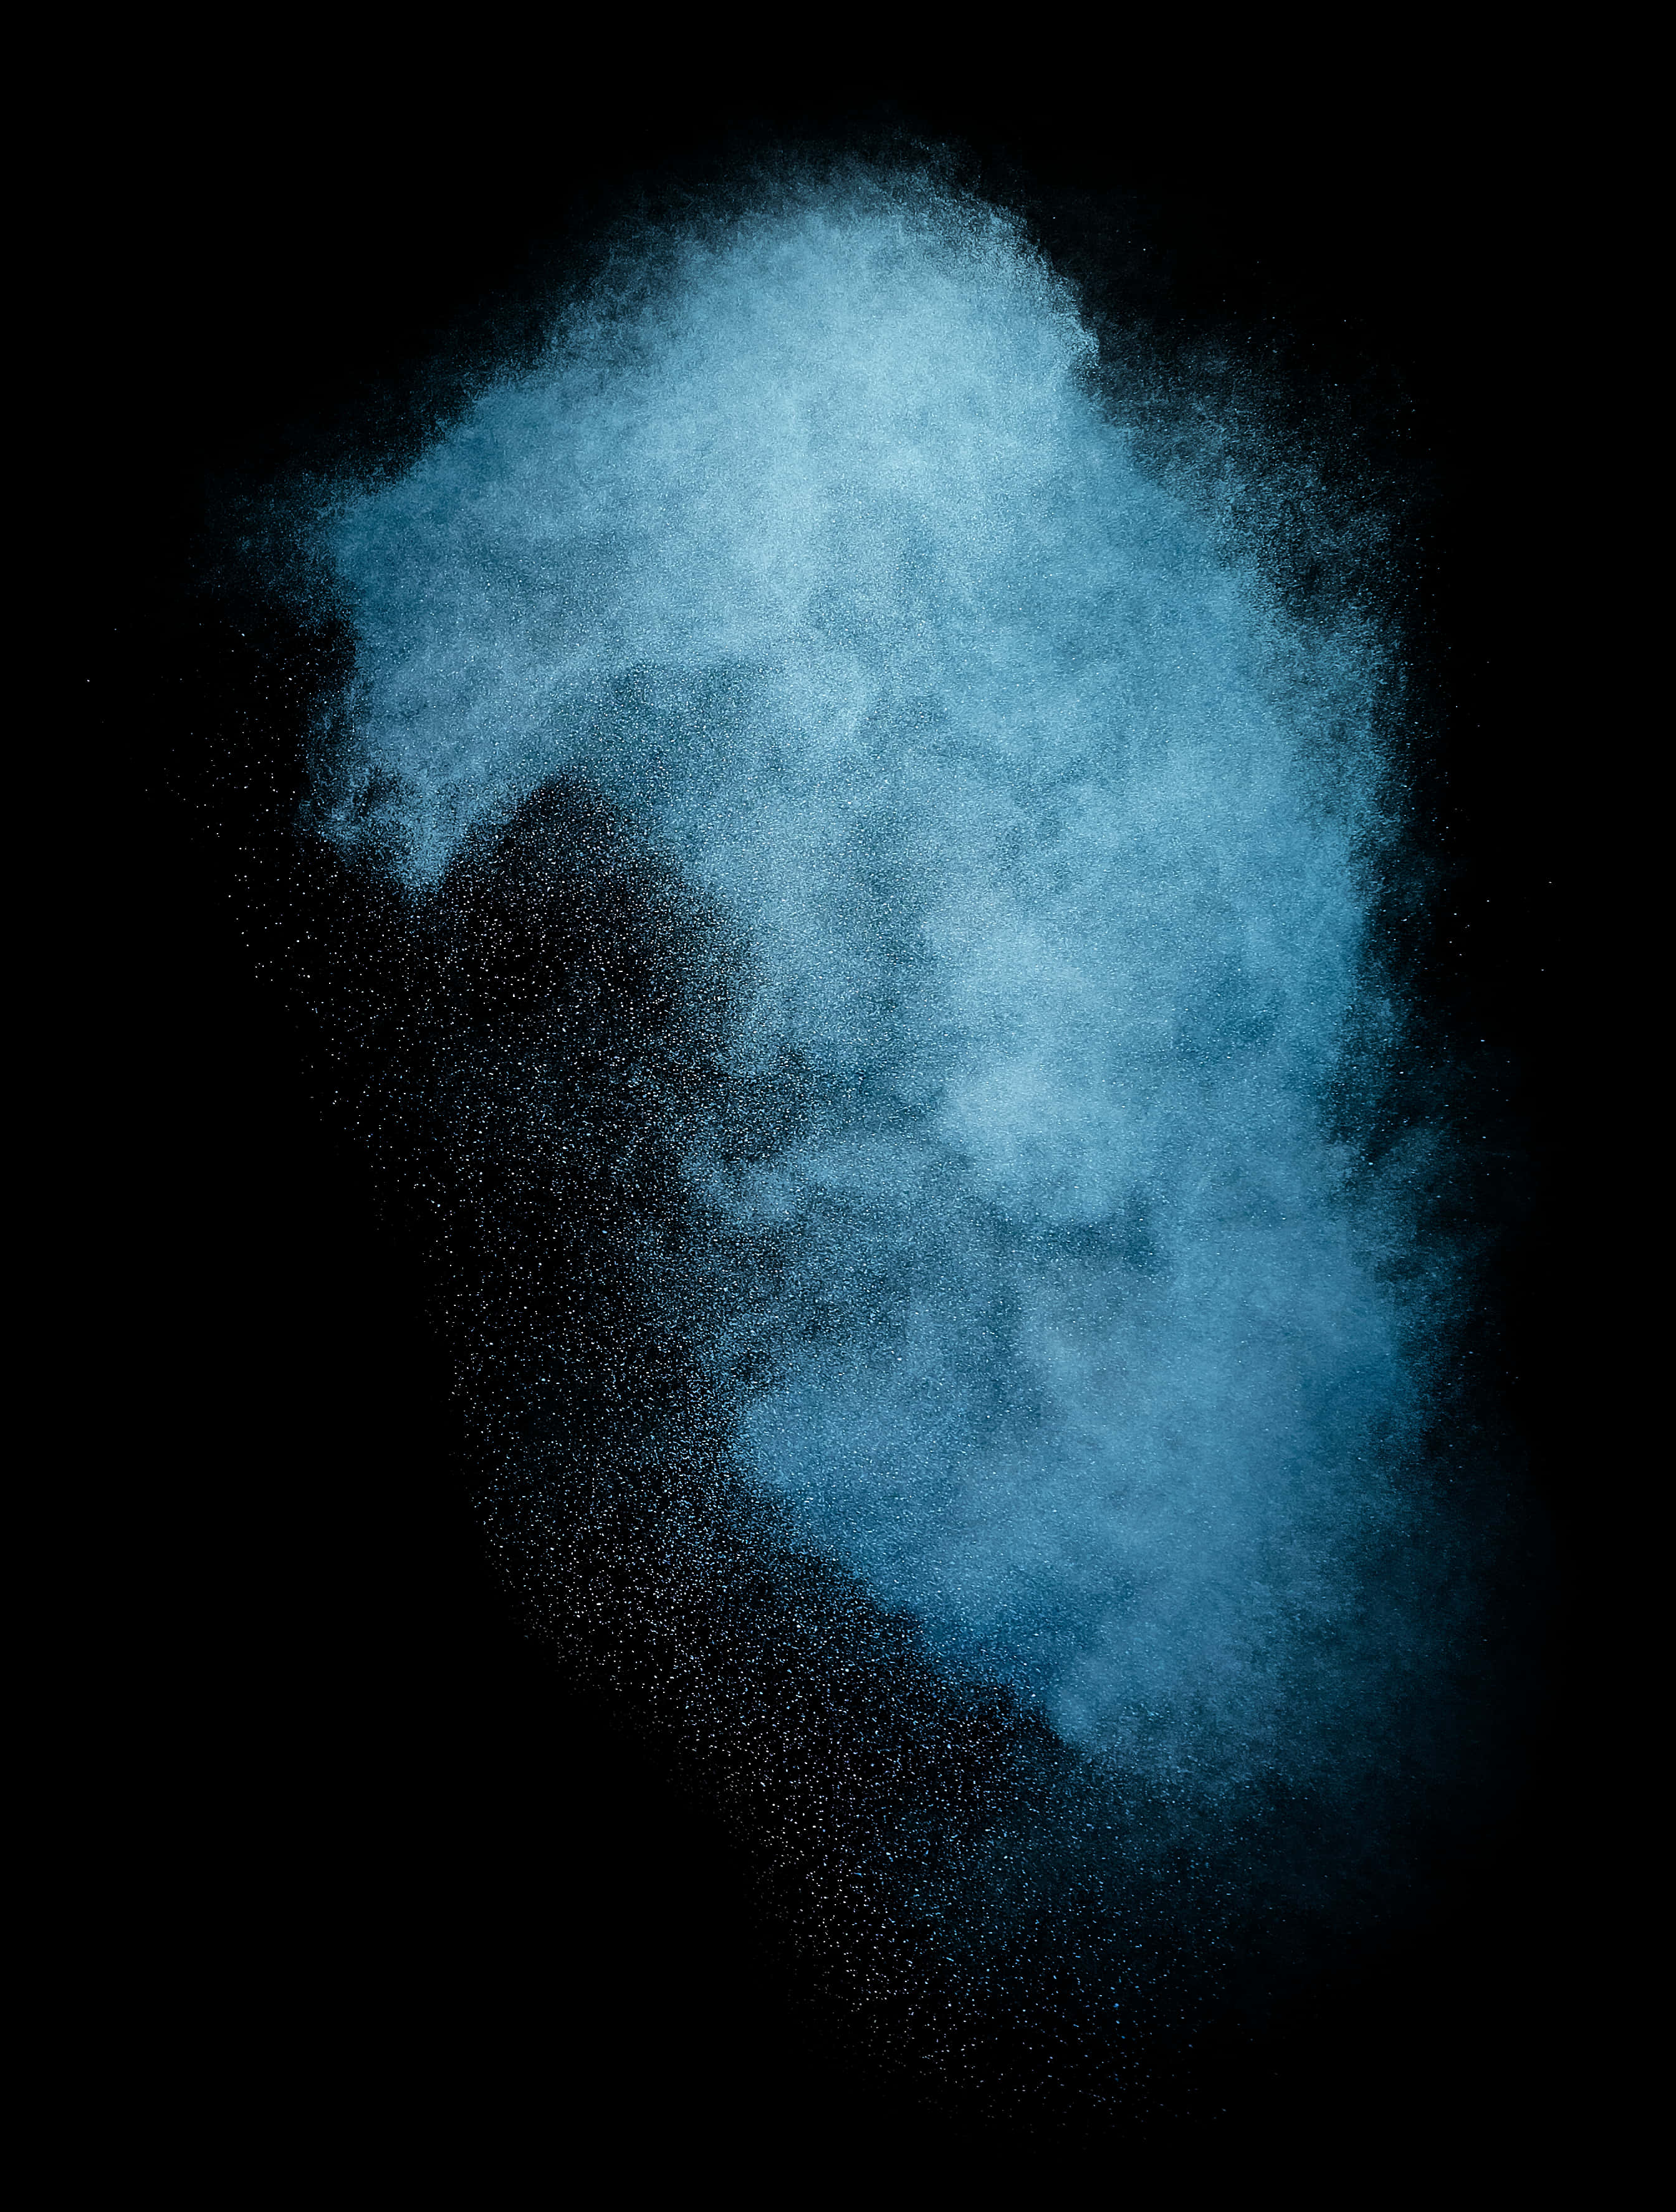 A Blue Powder Explosion On A Black Background